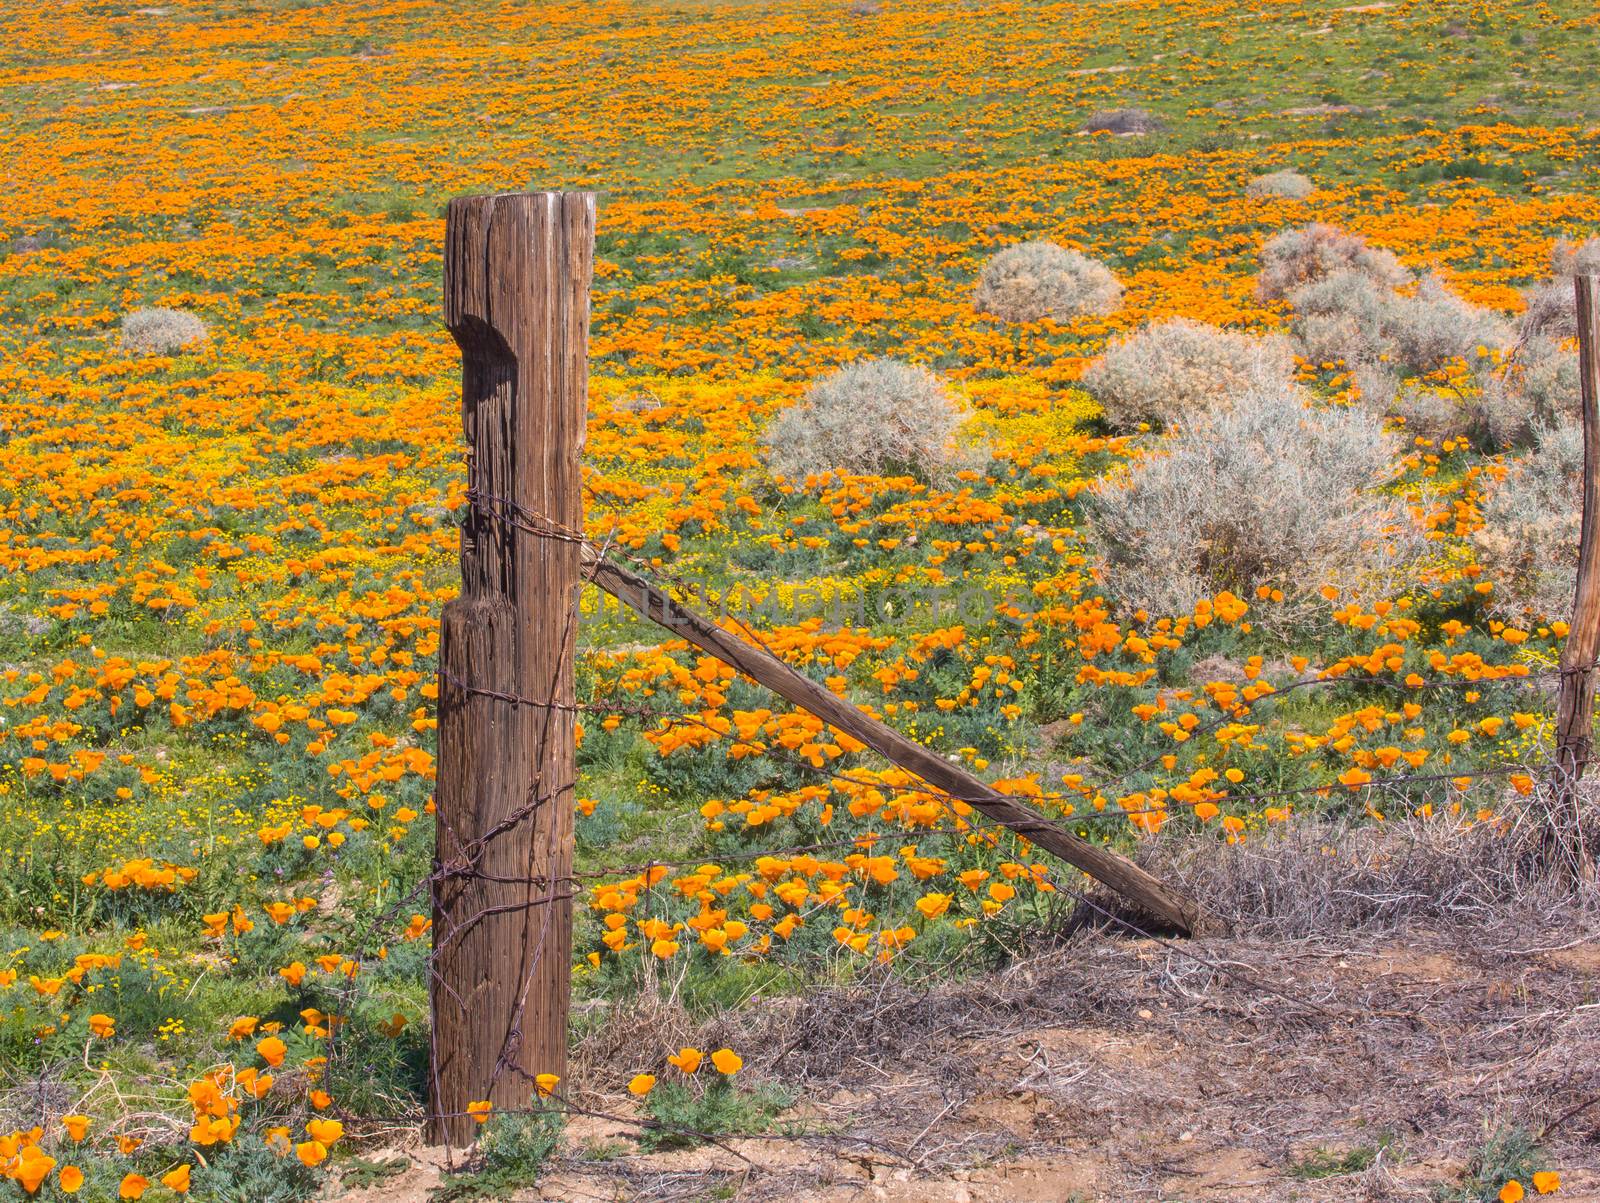 Poppies of Antelope Valley, California